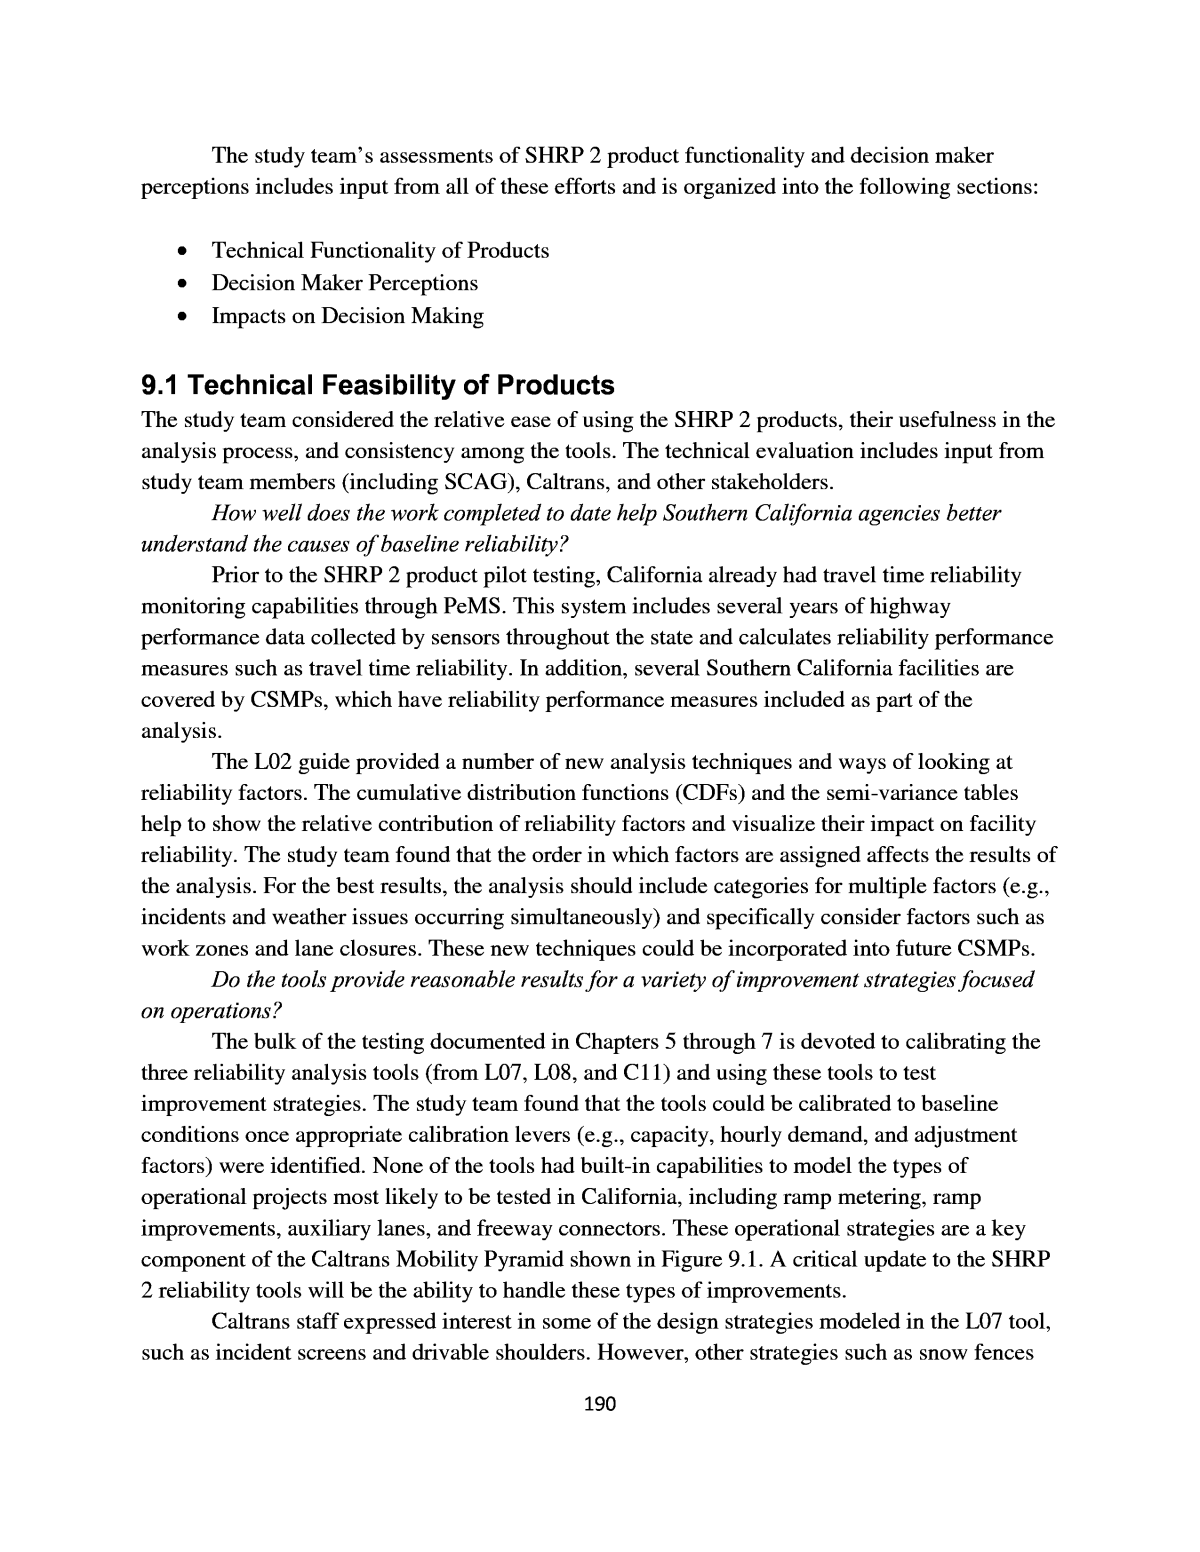 technical feasibility analysis example